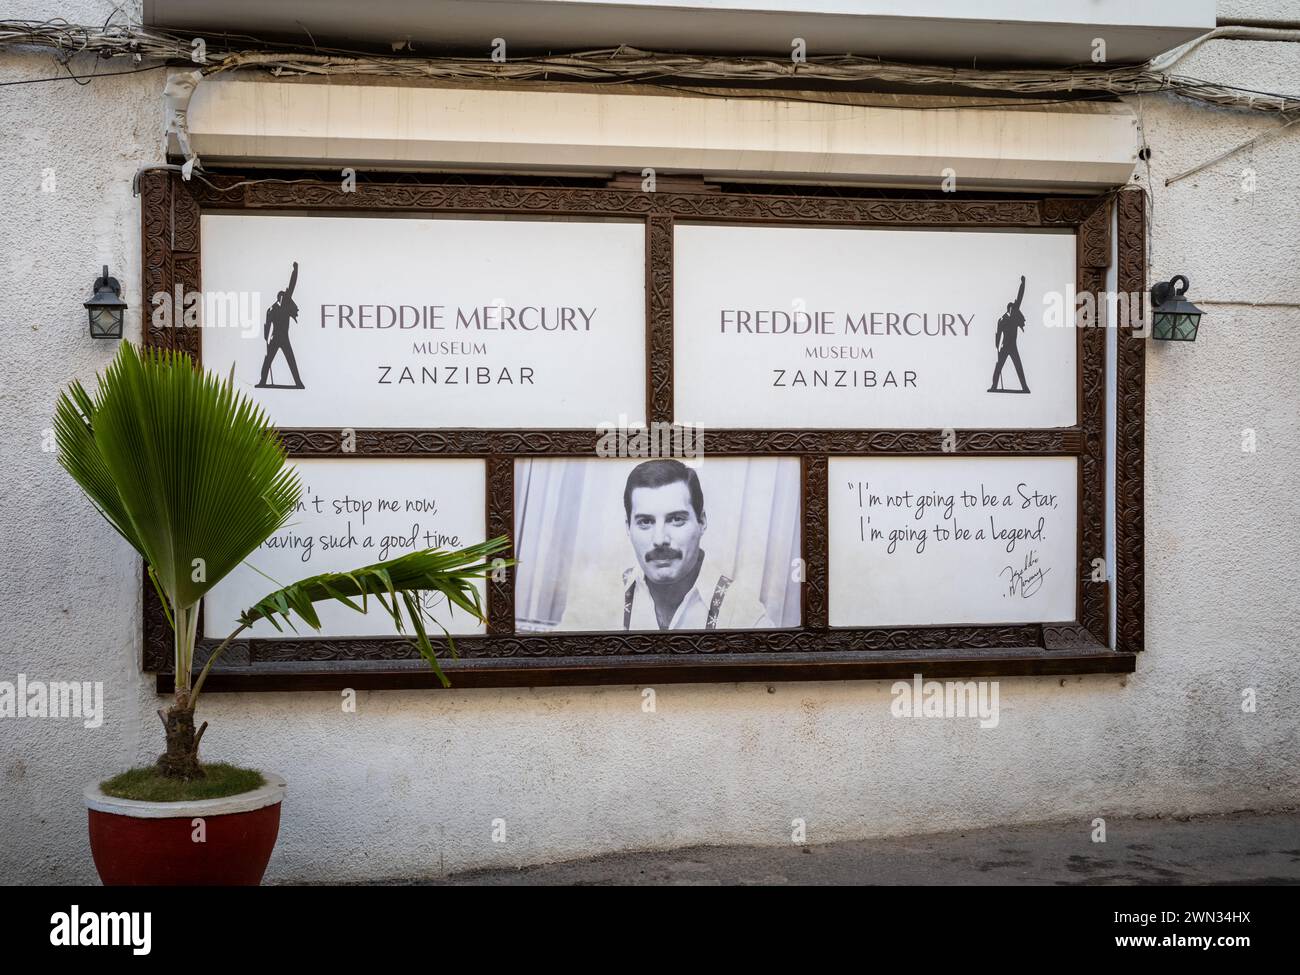 A sign outside the Freddie Mercury Museum in Stone Town, Zanzibar, Tanzania Stock Photo